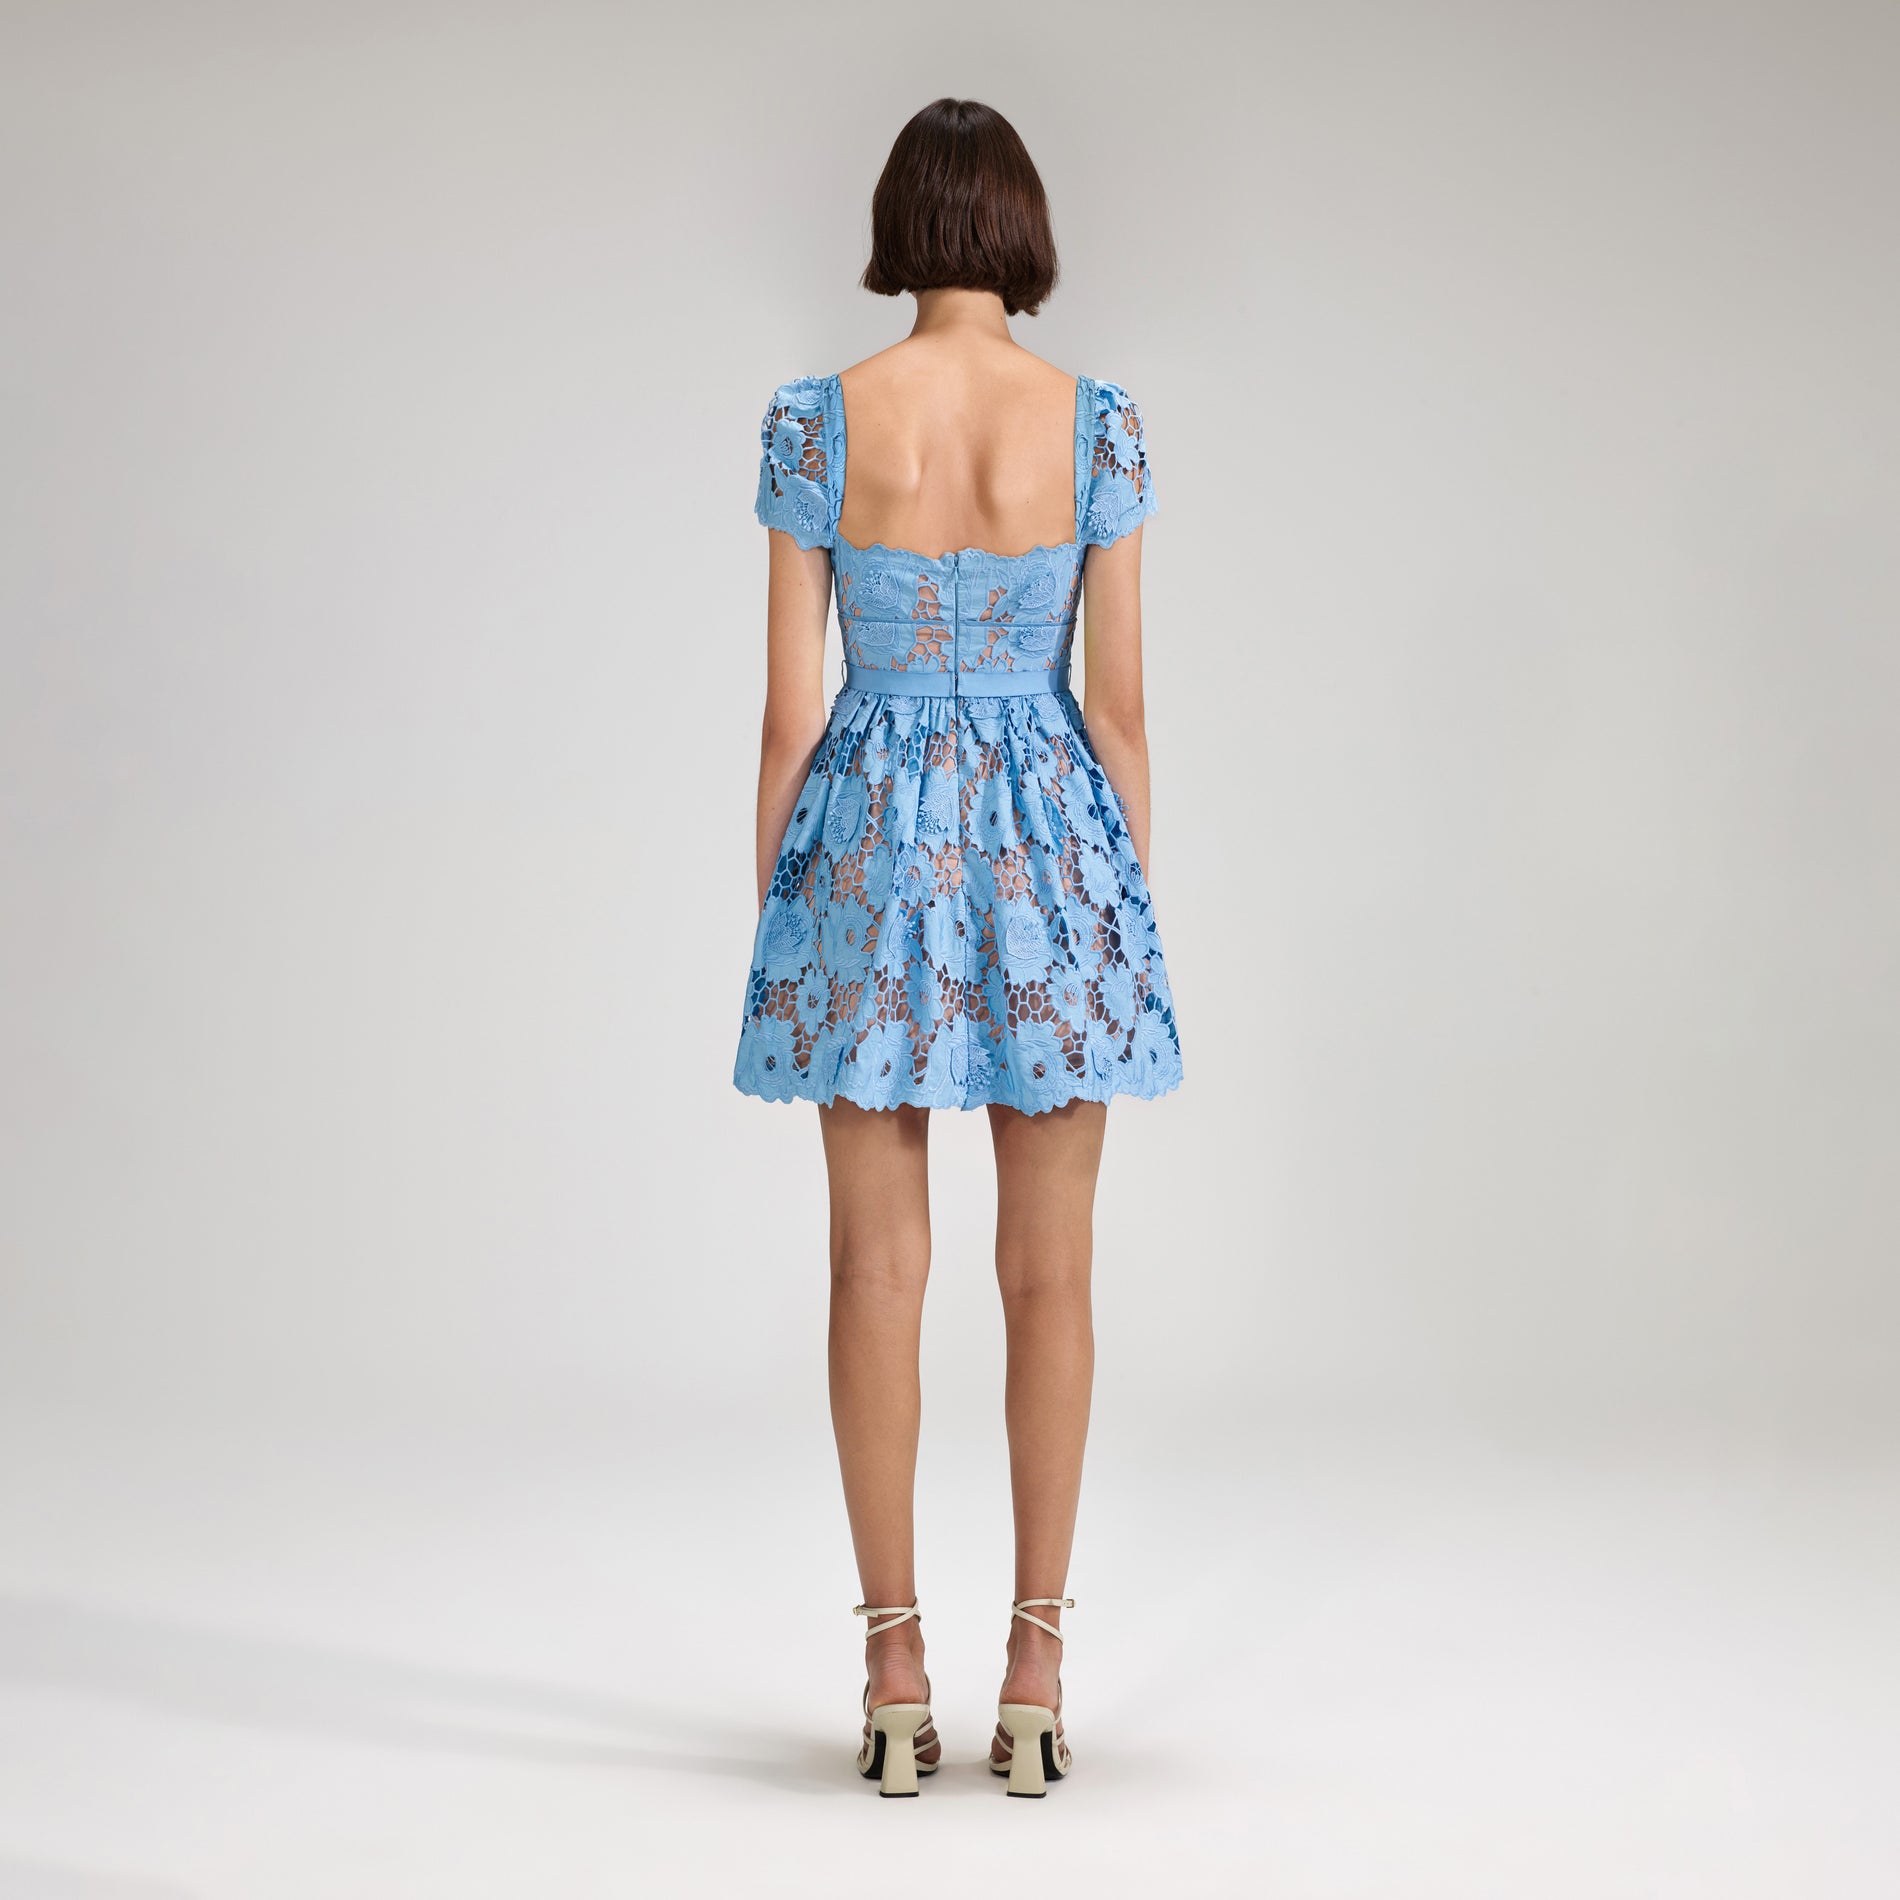 A woman wearing the Blue 3D Cotton Lace Mini Dress